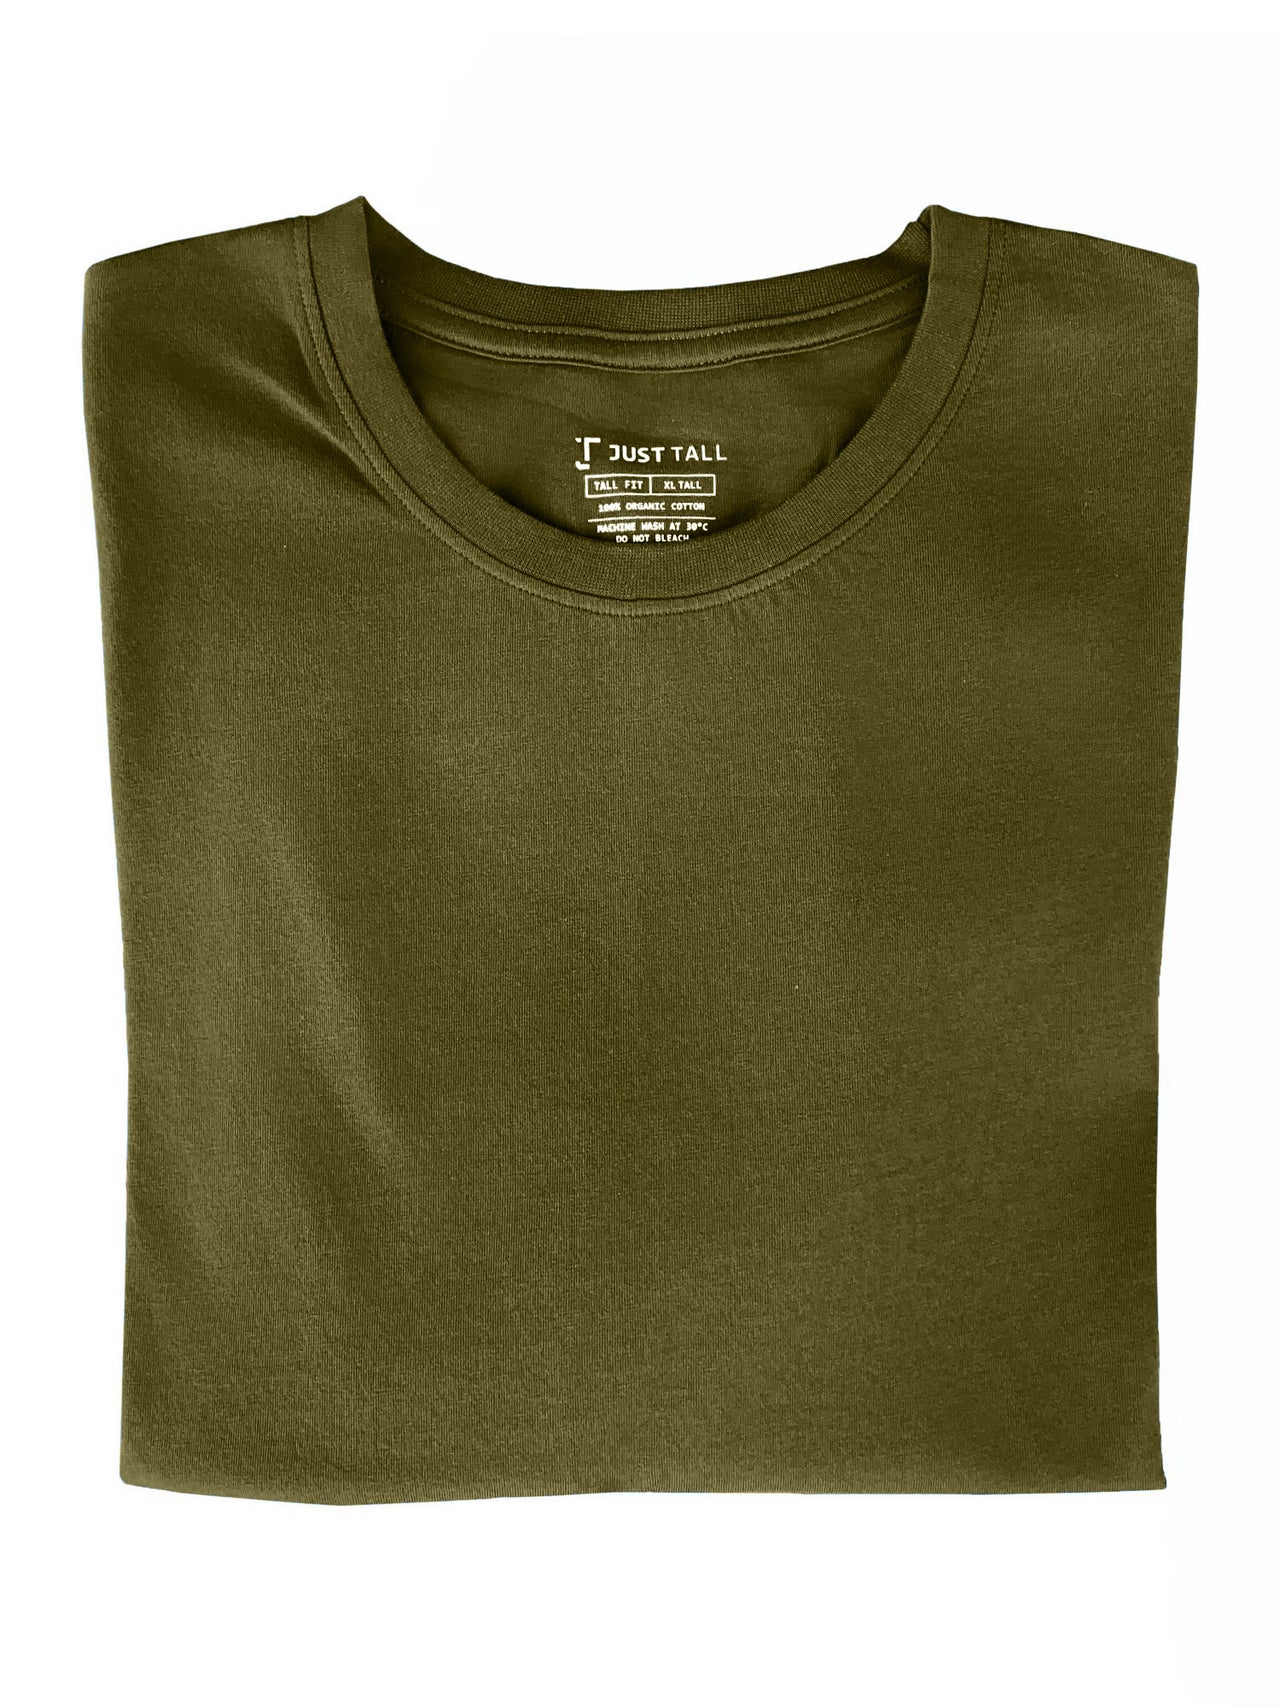 A military green tall t-shirt.